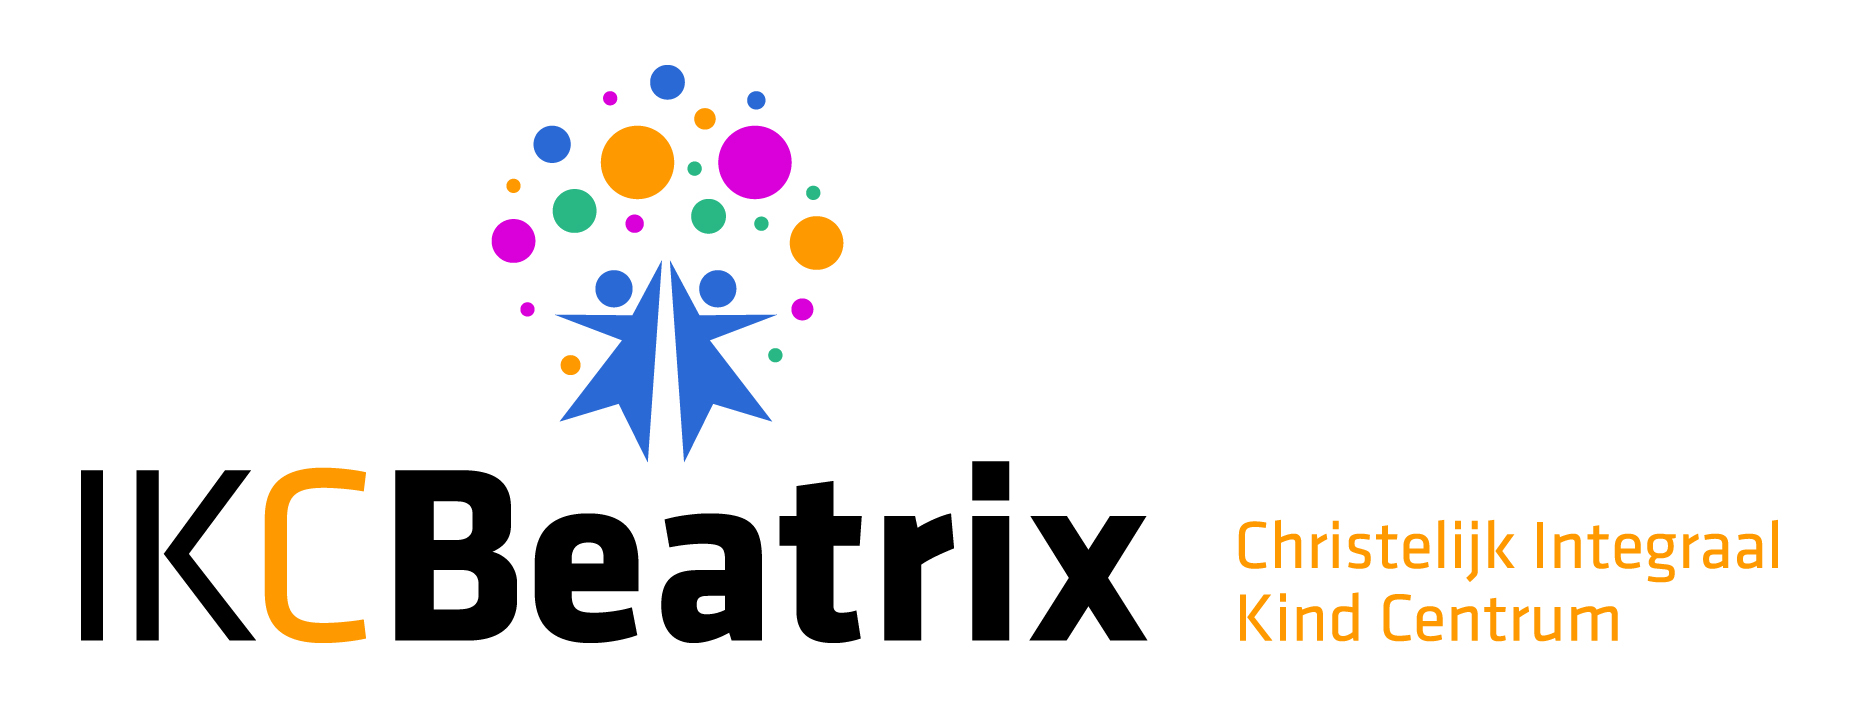 Logo IKC Beatrix  